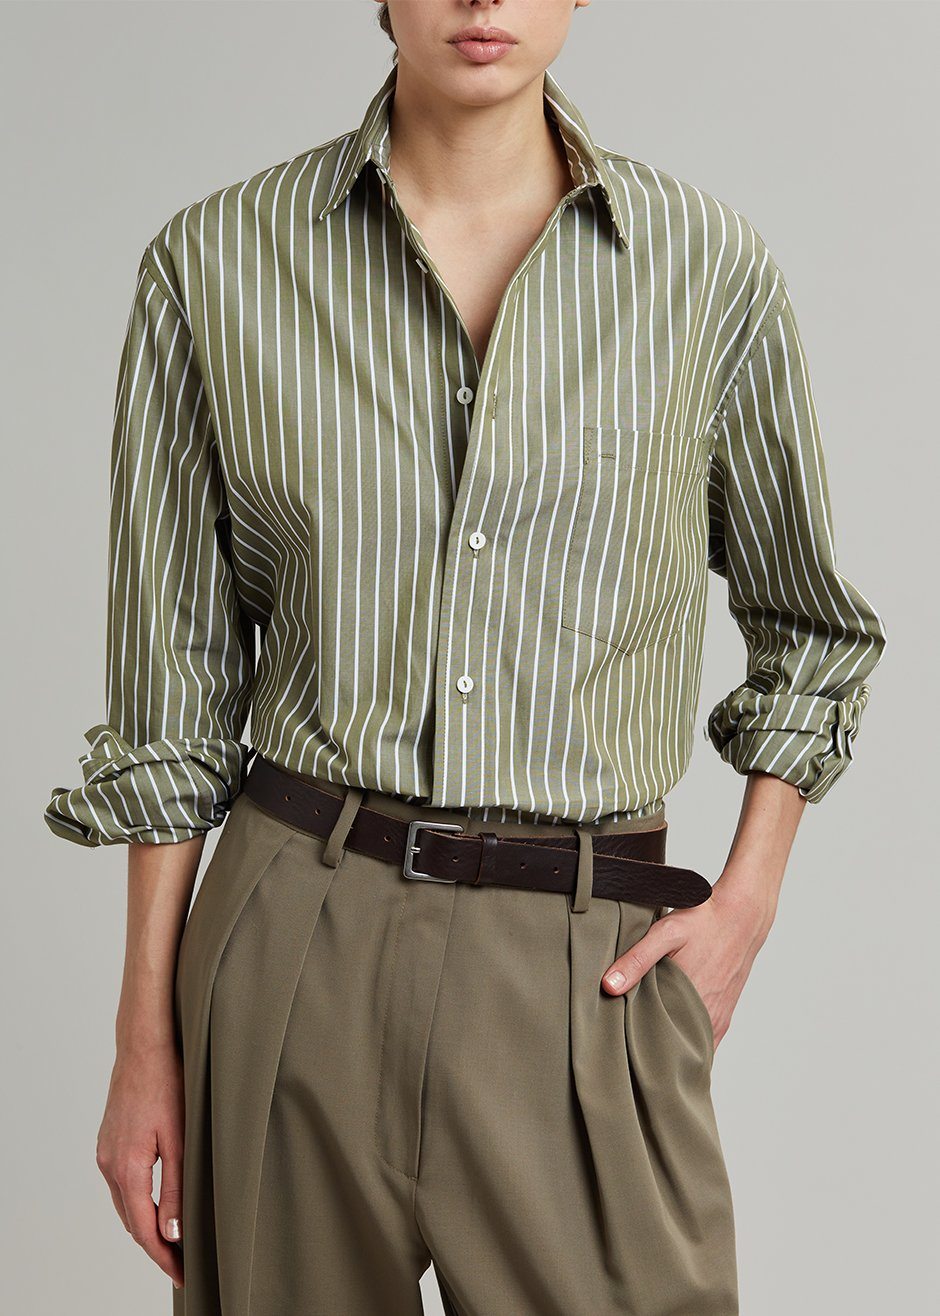 Matteau Classic Stripe Shirt - Olive - 1